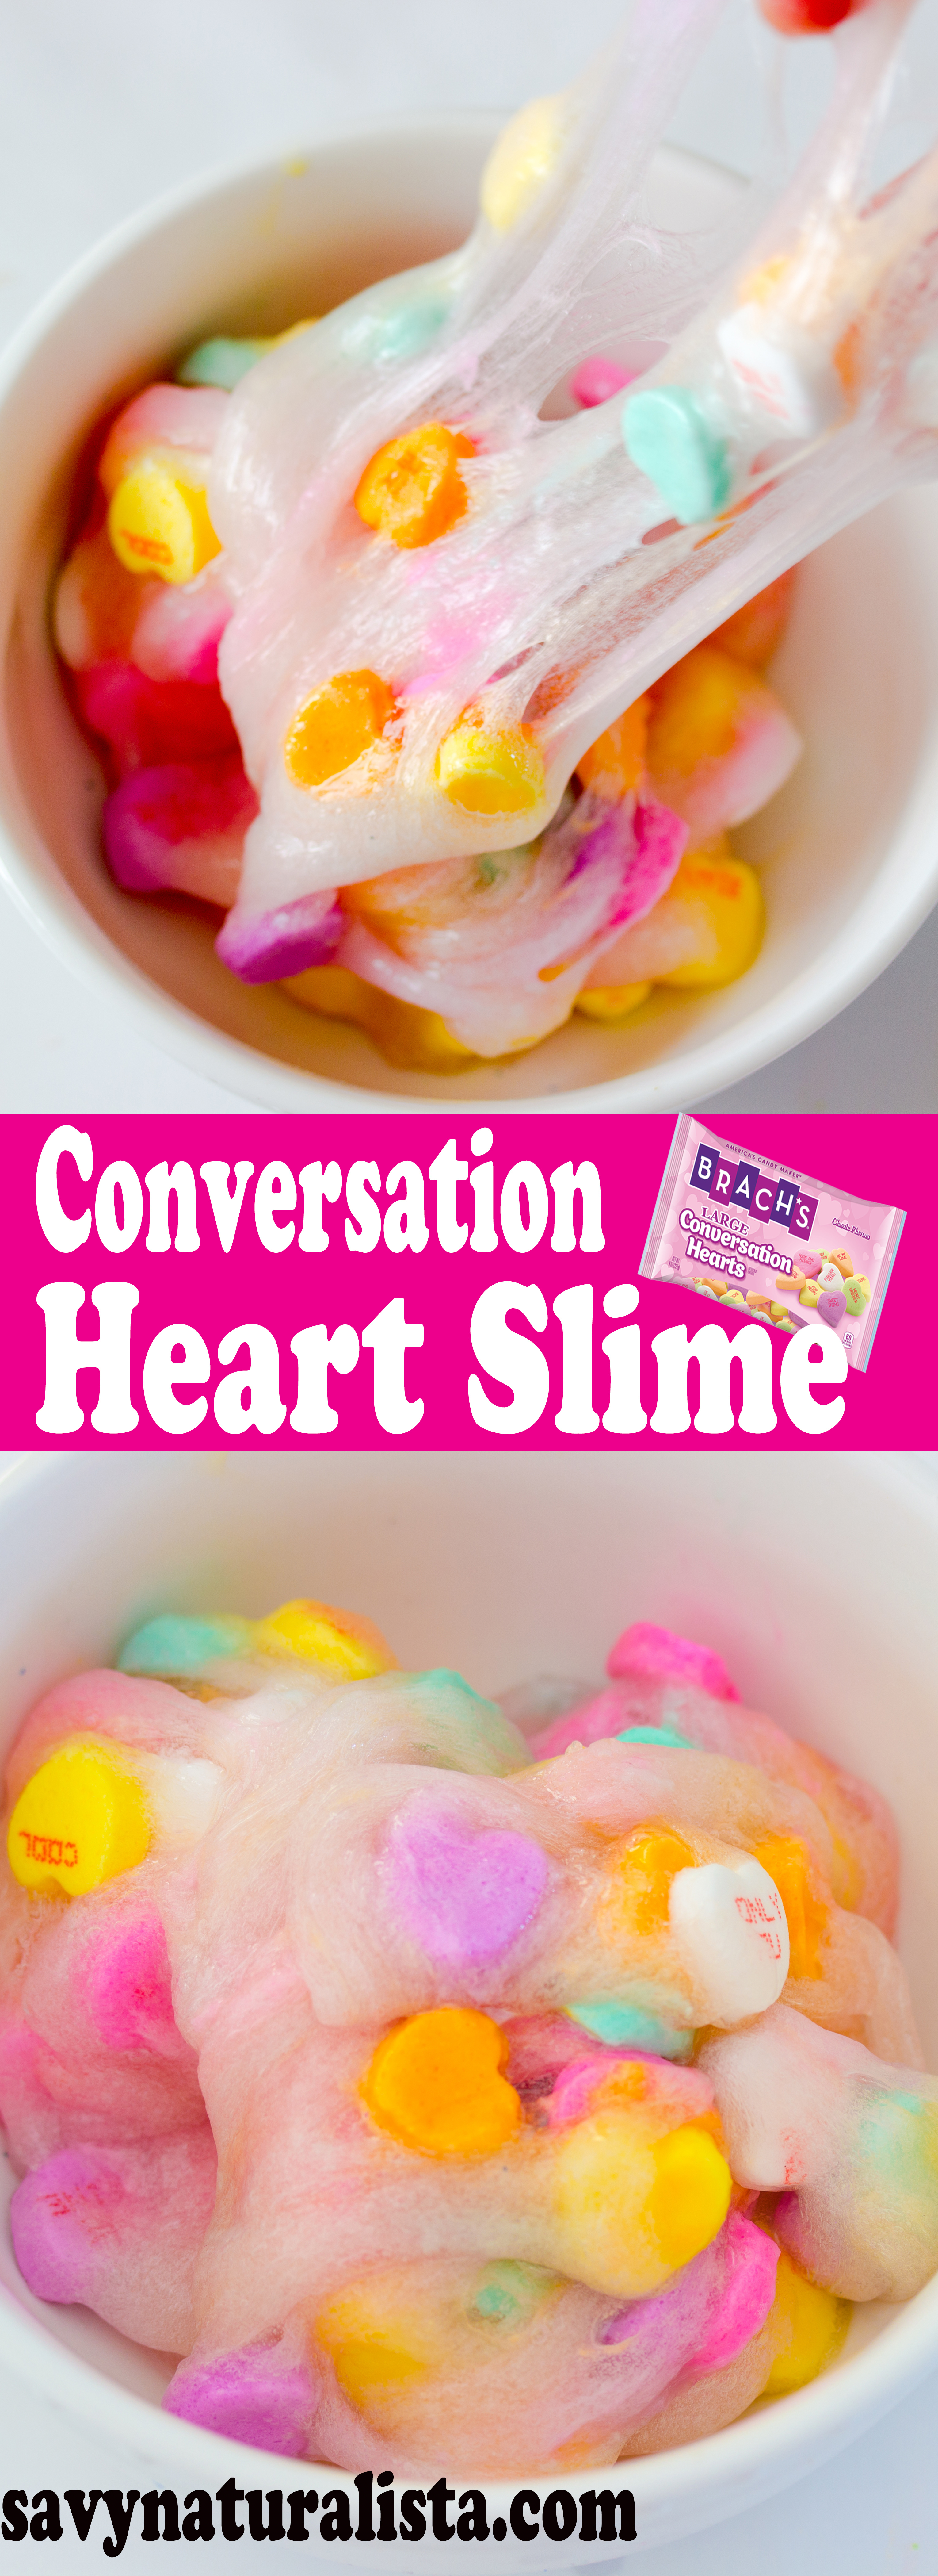 Conversation Heart Slime Tutorial